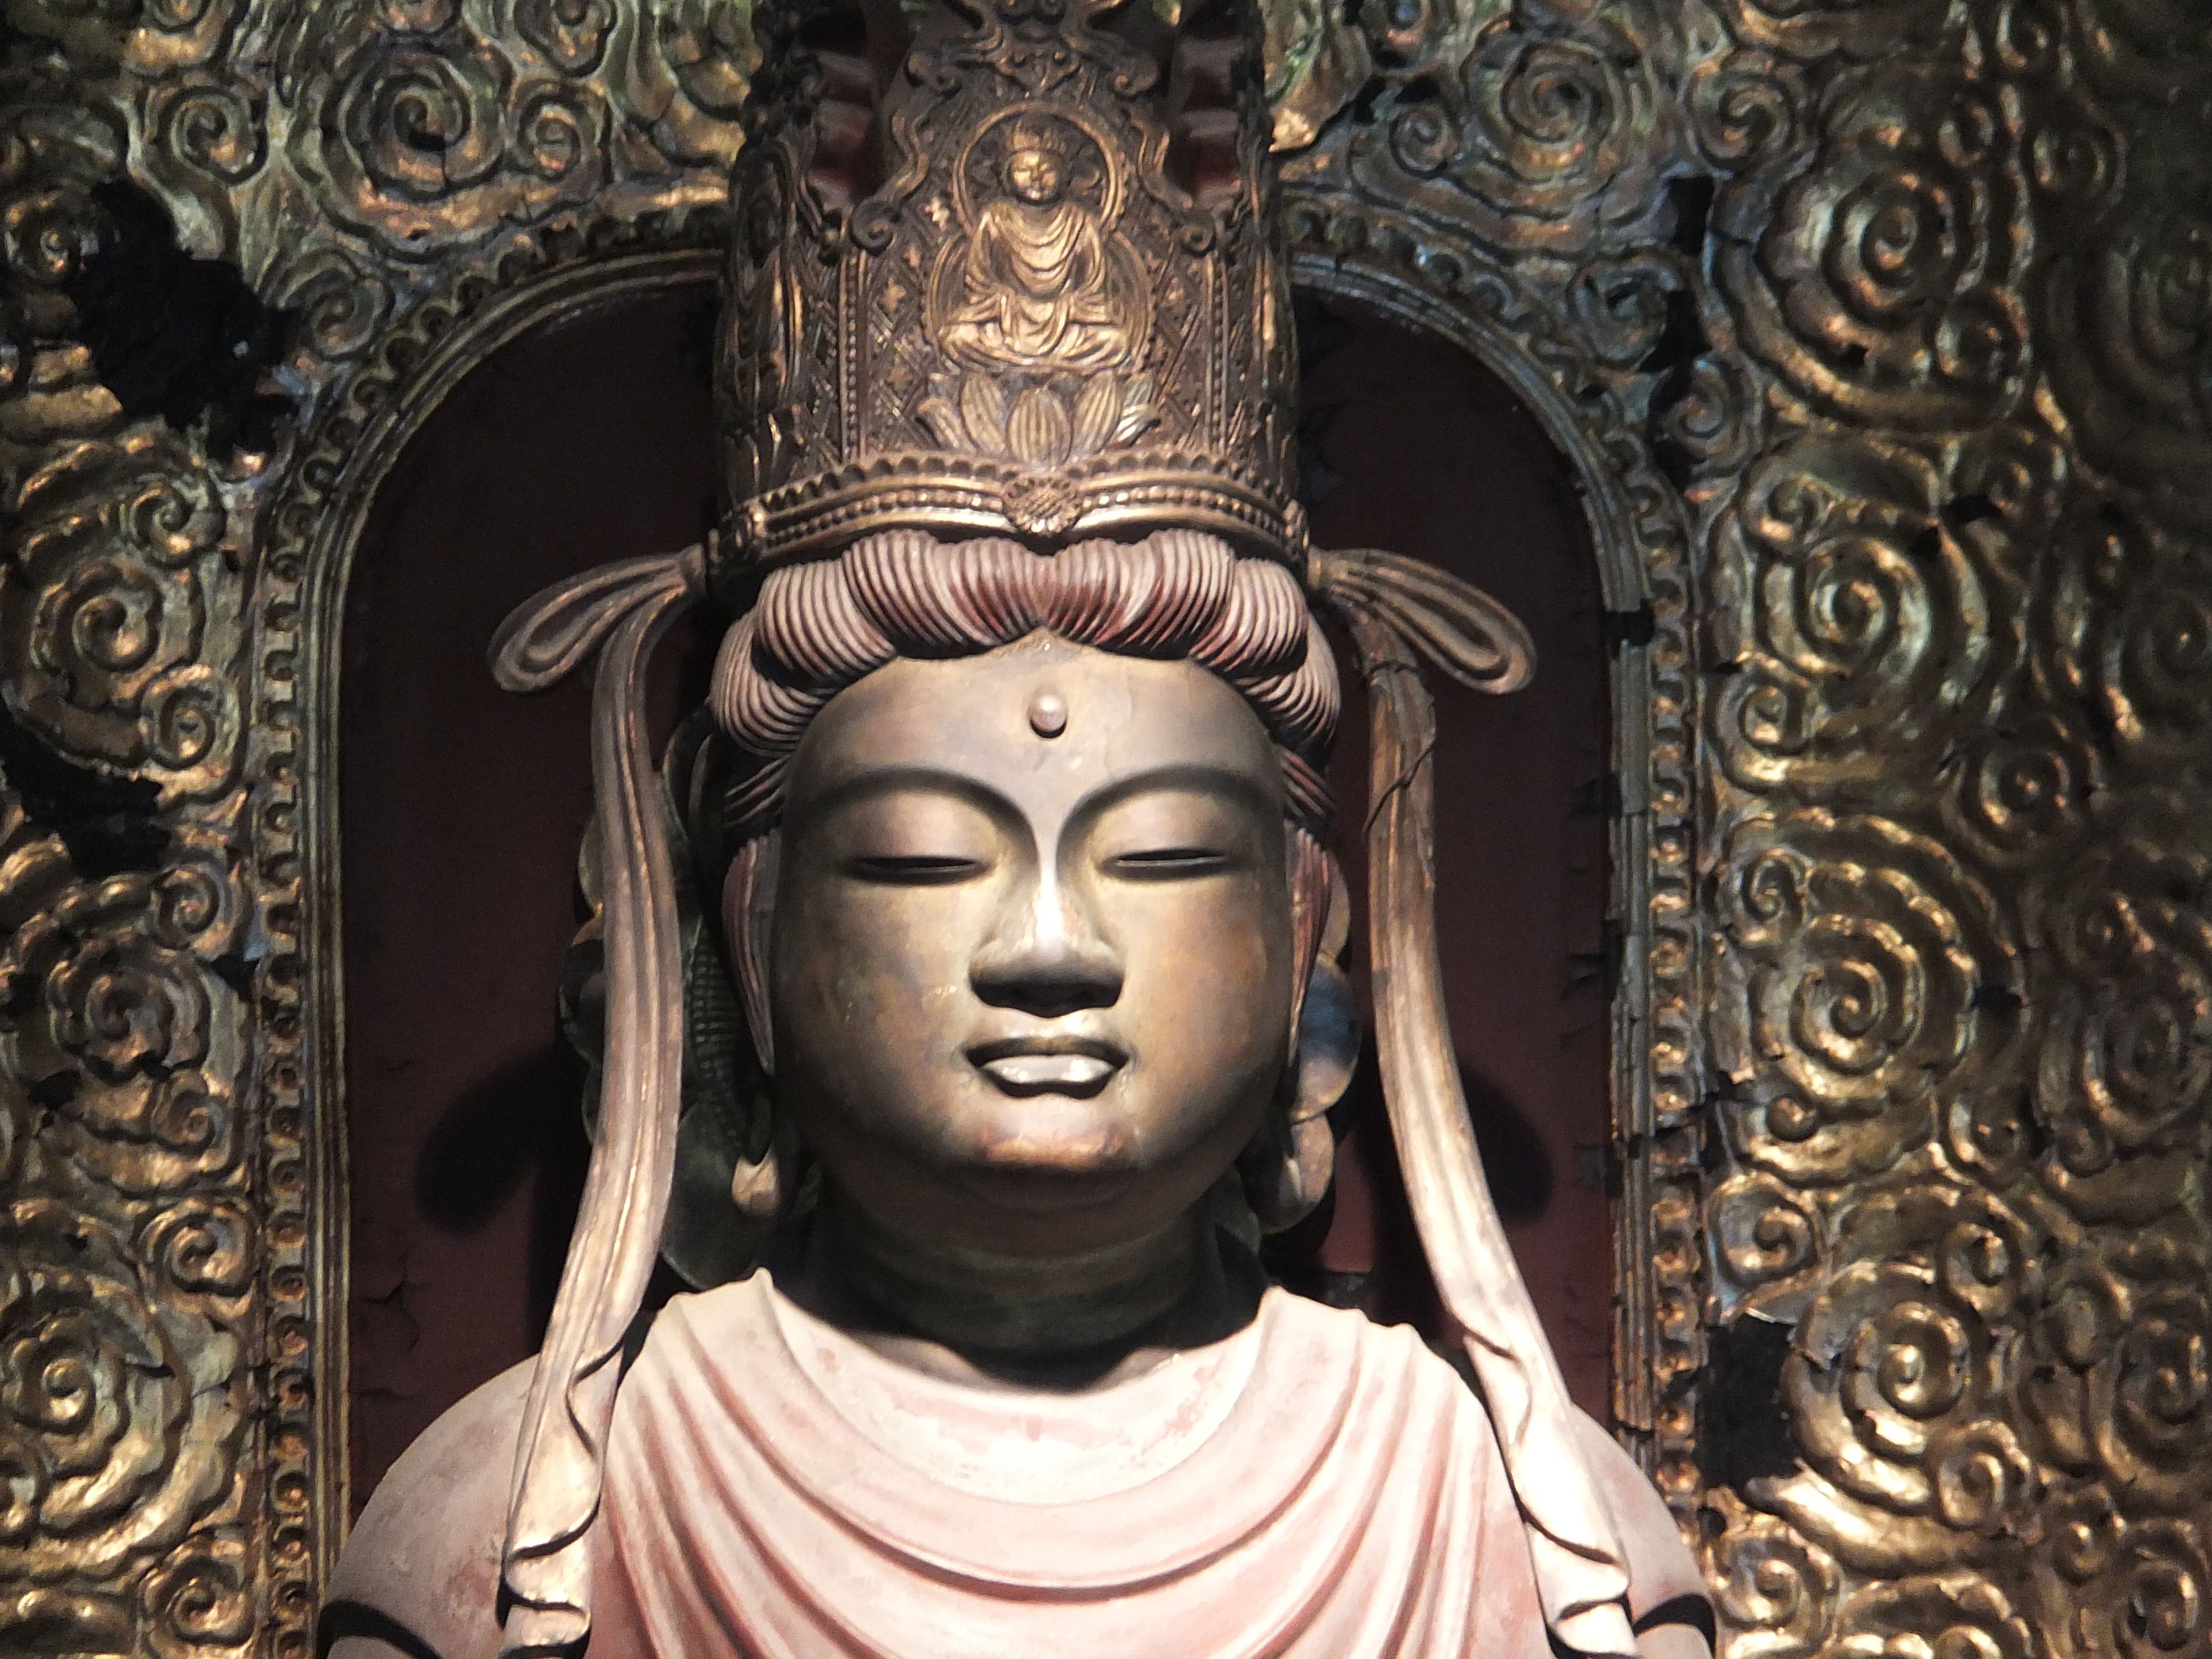 世界遺産 平泉 毛越寺常行堂 宝冠阿弥陀如来 World Heritage Motuuji Temple Buddha Statue Crowned Amida Nyorai 写真の旅 世界 日本 無料壁紙 Free Photo Wallpaper Japan World